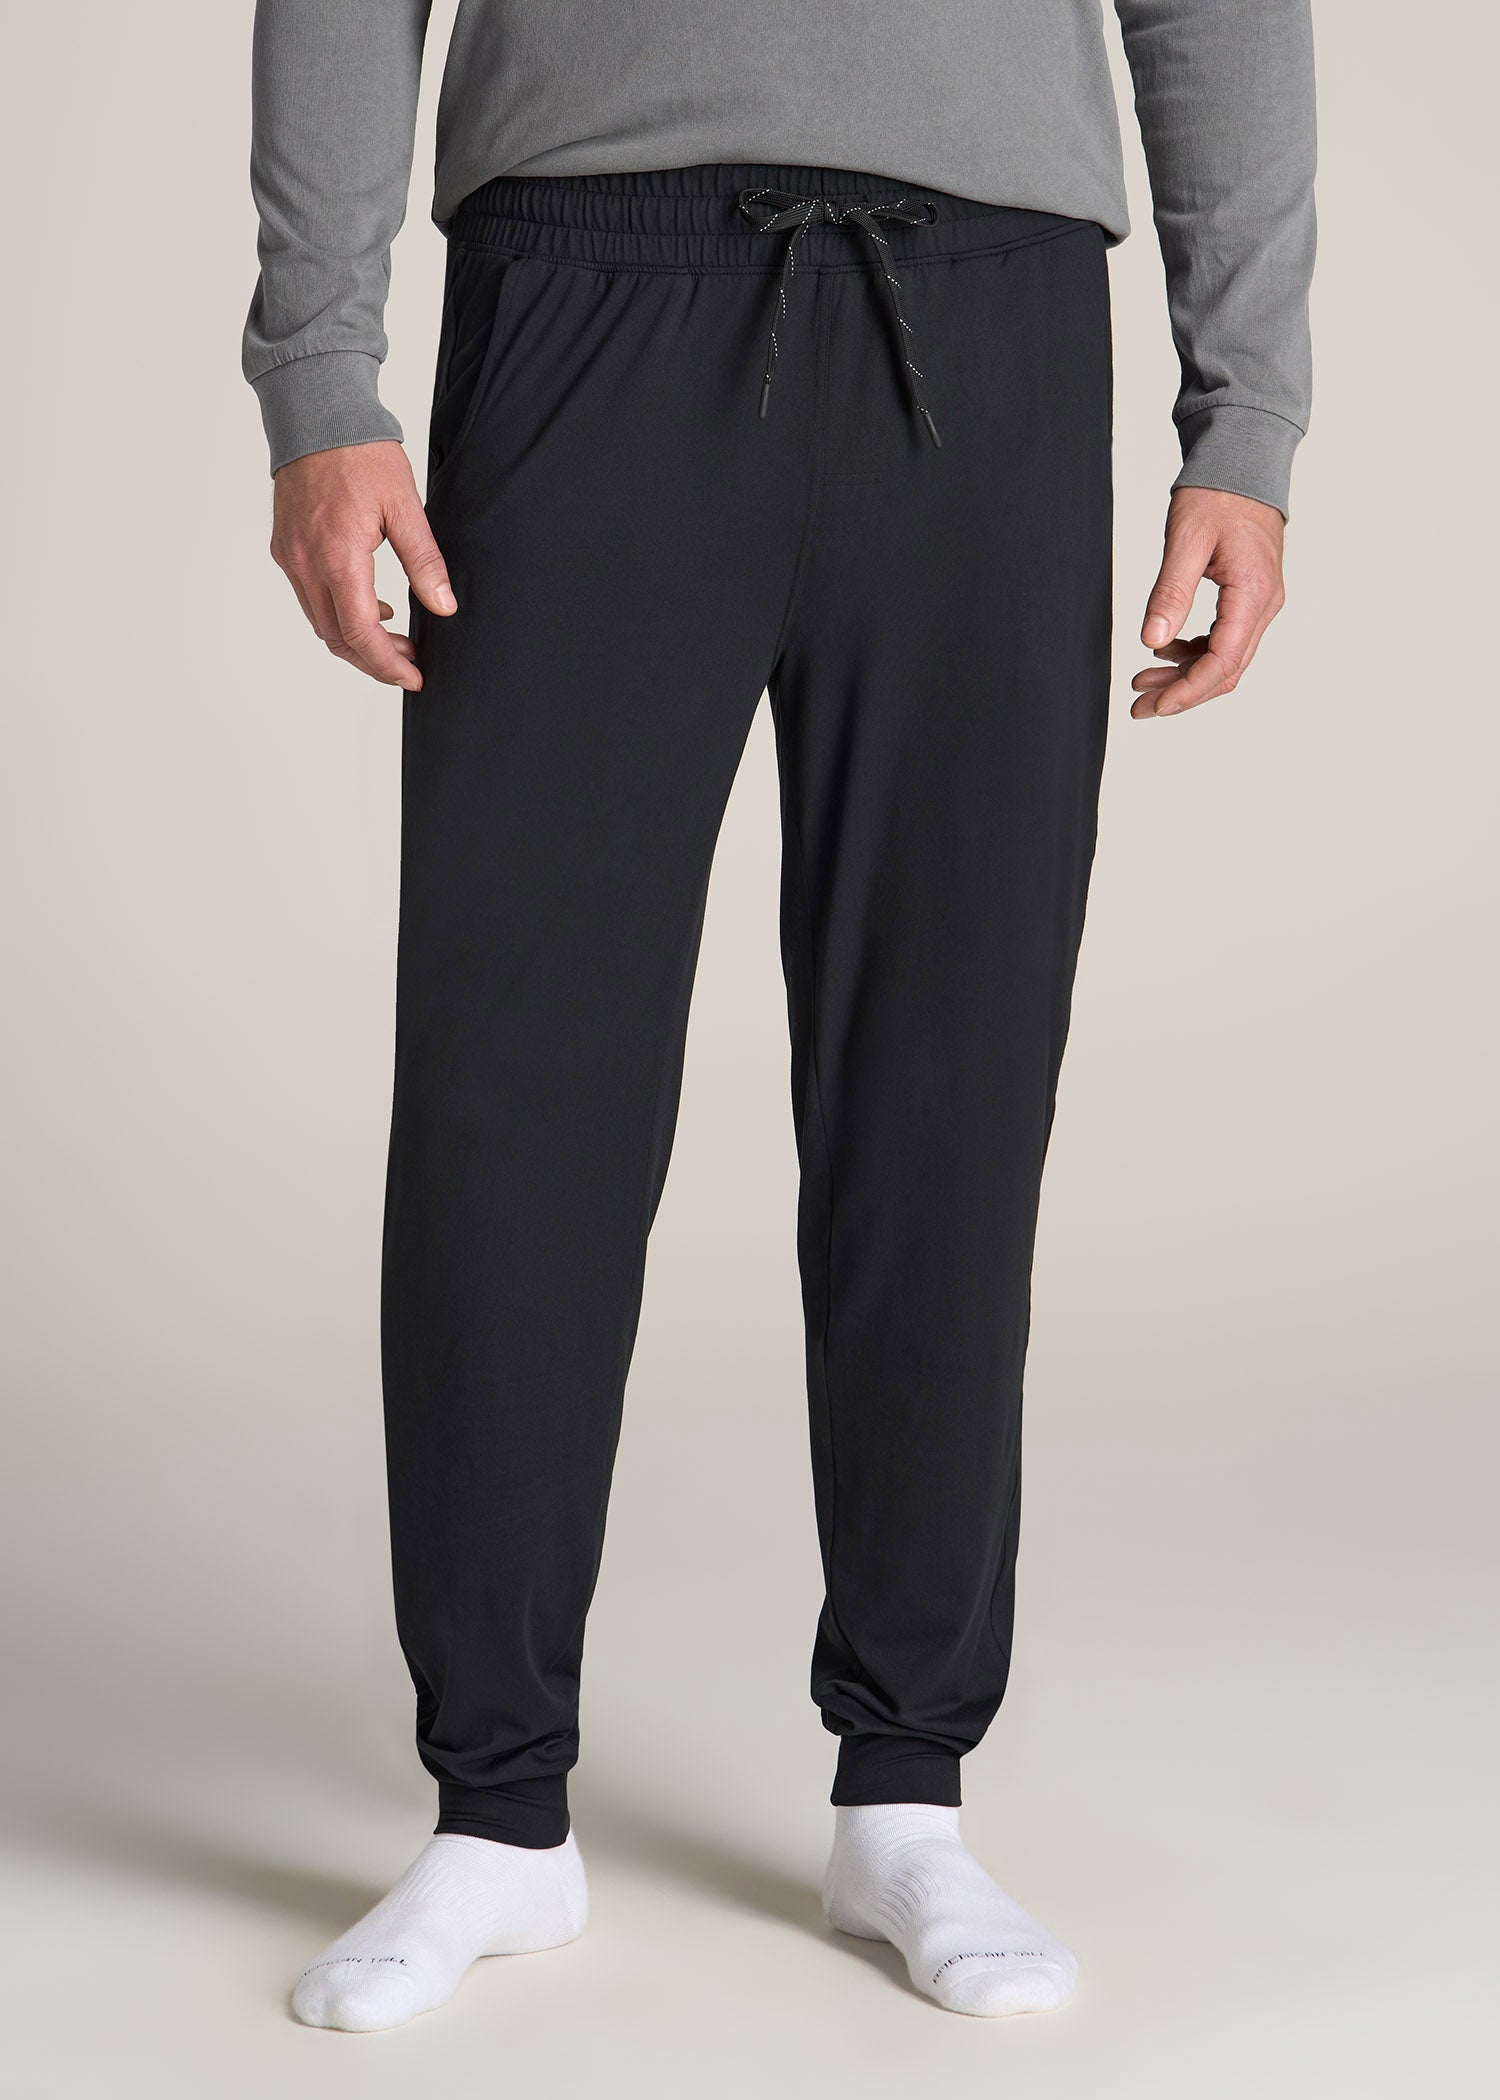 tek gear, Pants & Jumpsuits, Tek Gear Sz L Large Black Joggers Pants  Drawstring Elastic Waist Ankle Pockets